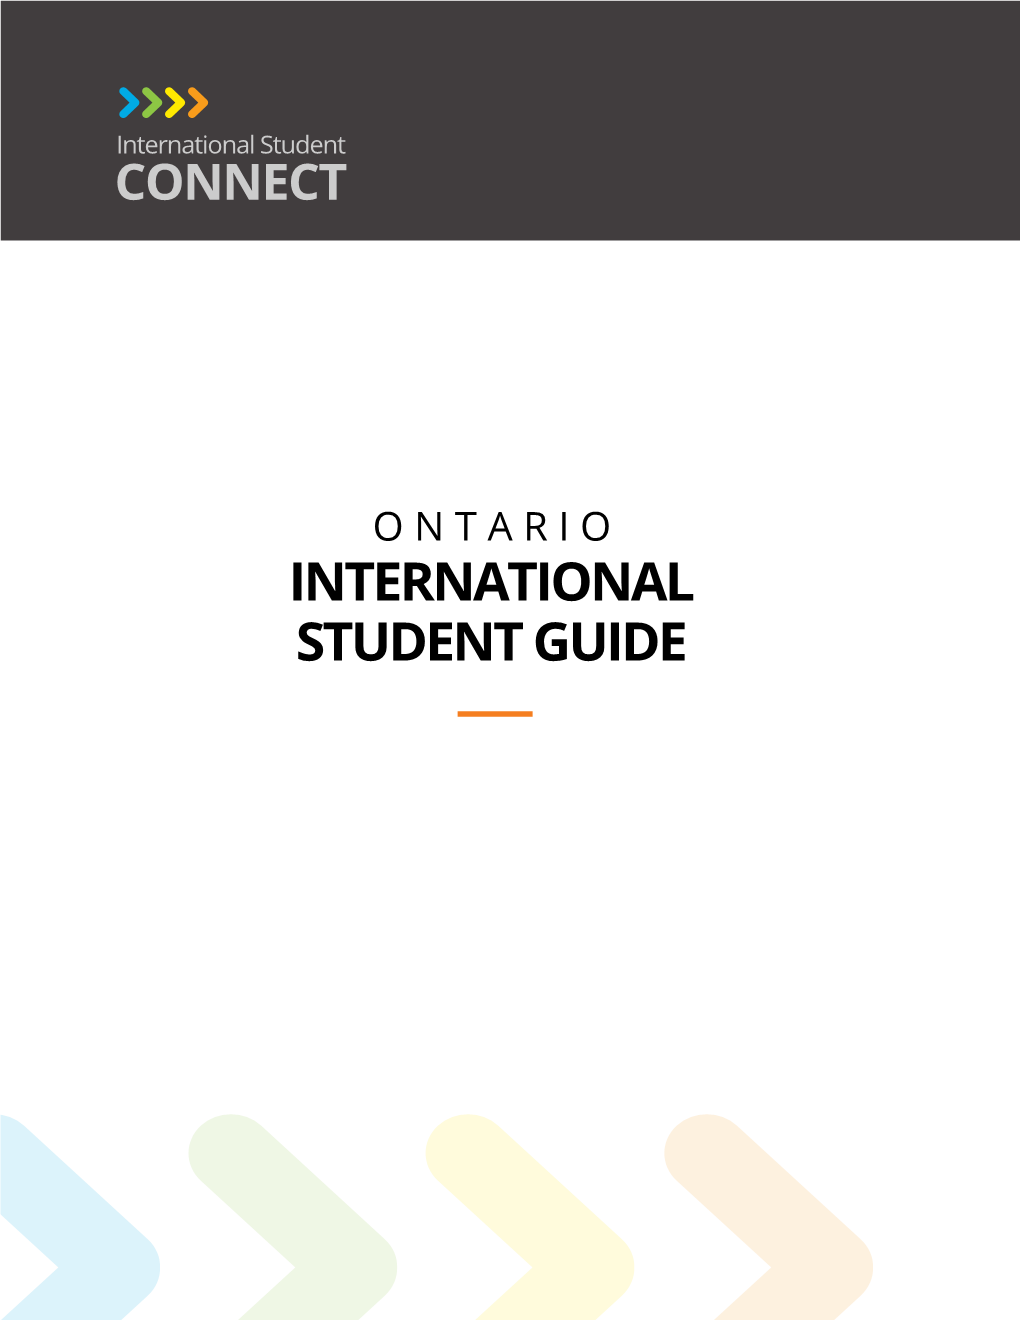 Ontario International Student Guide